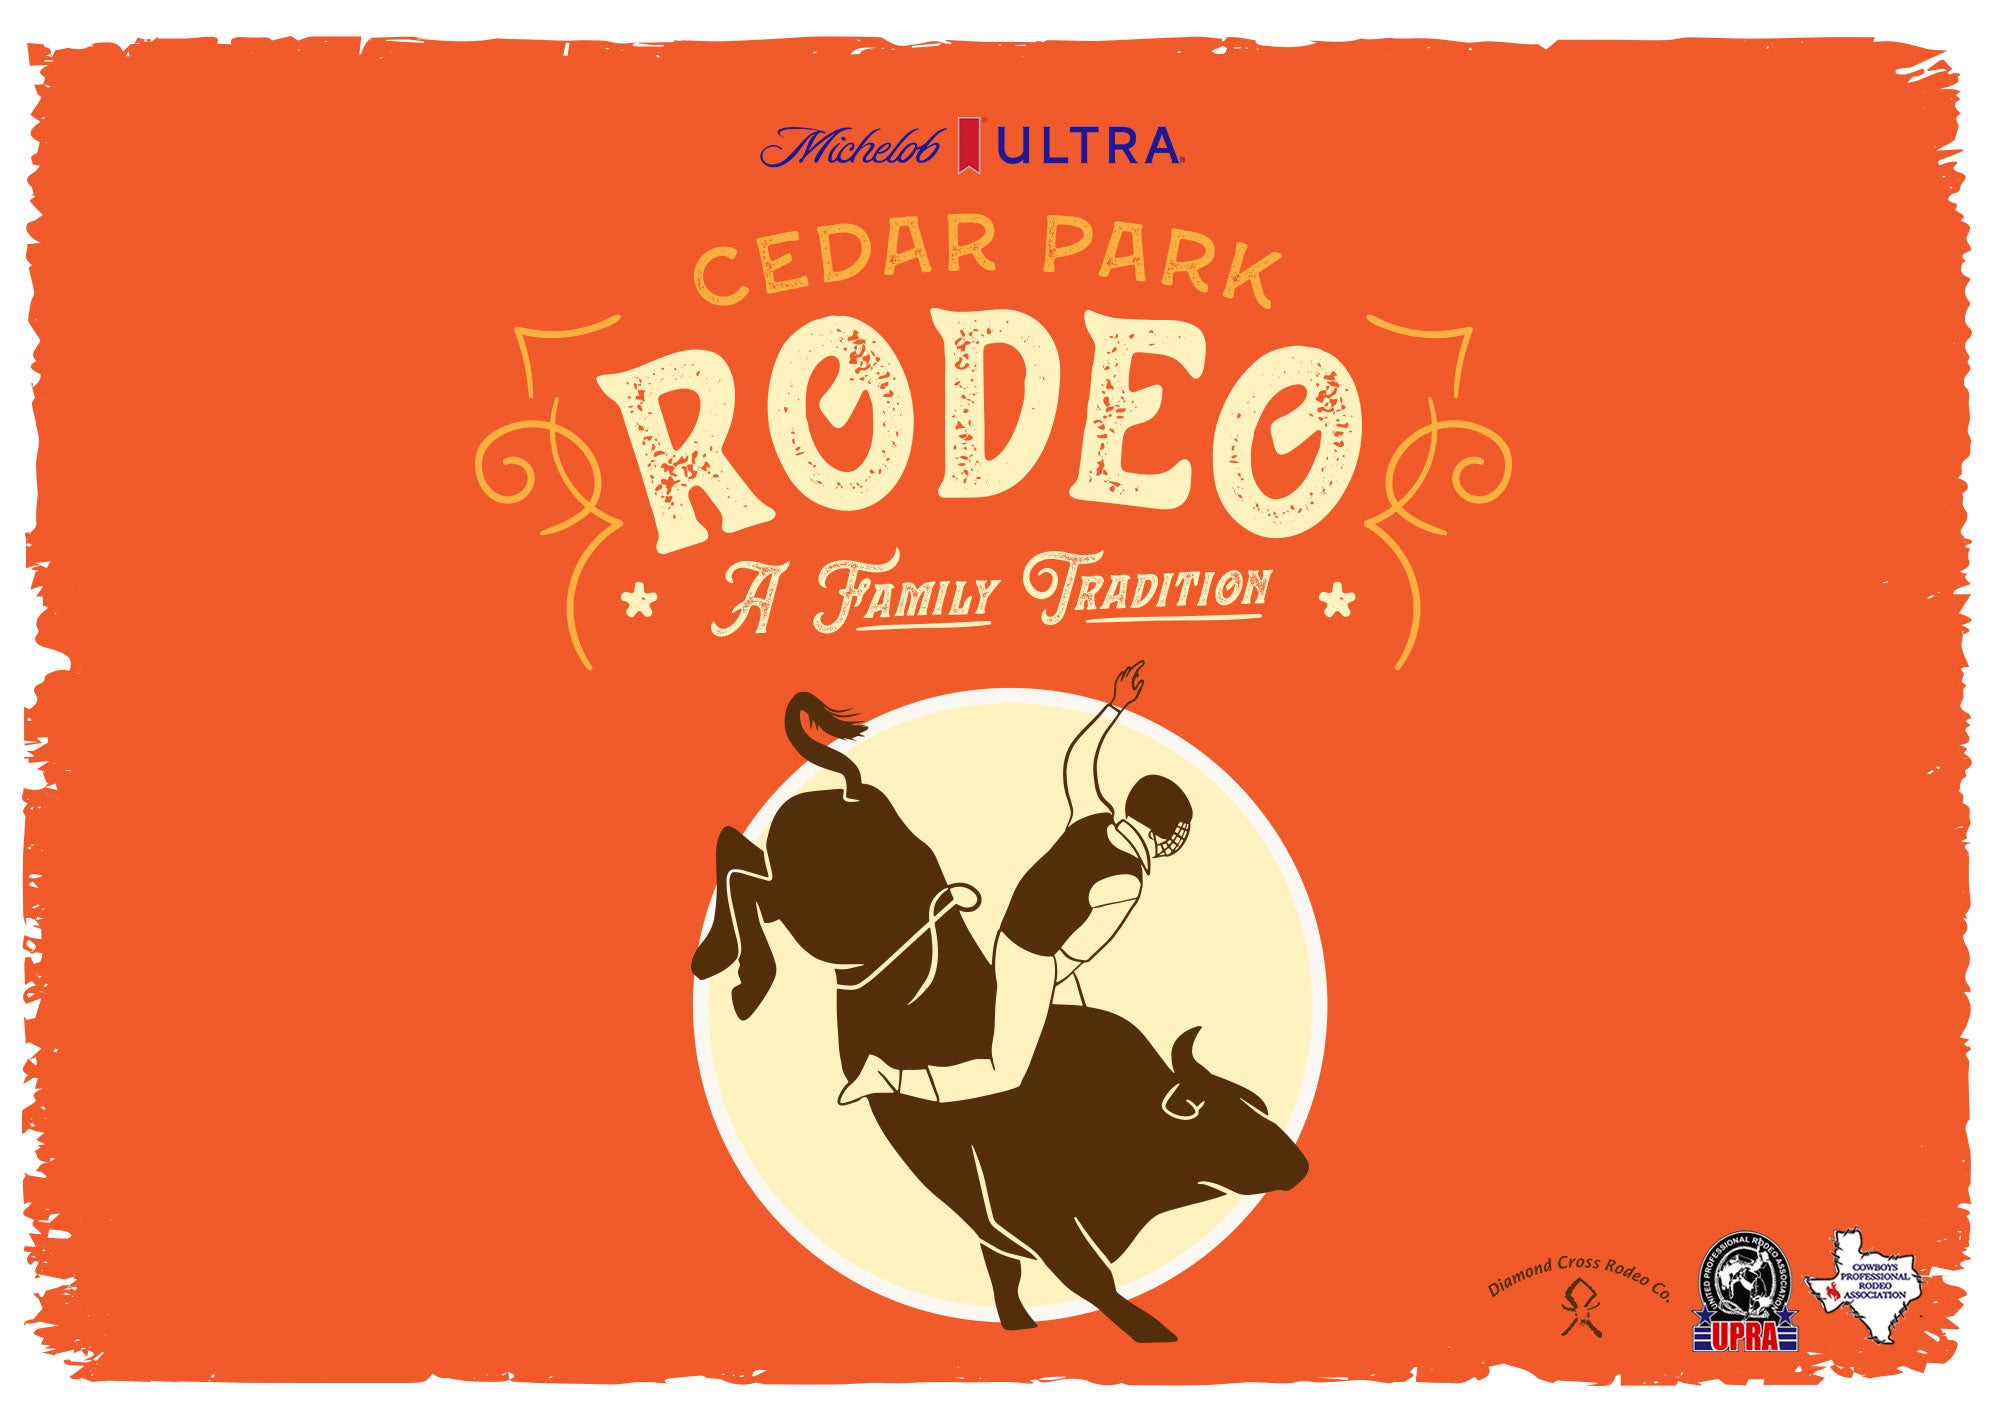 Cedar Park Rodeo Returns Aug 9-10